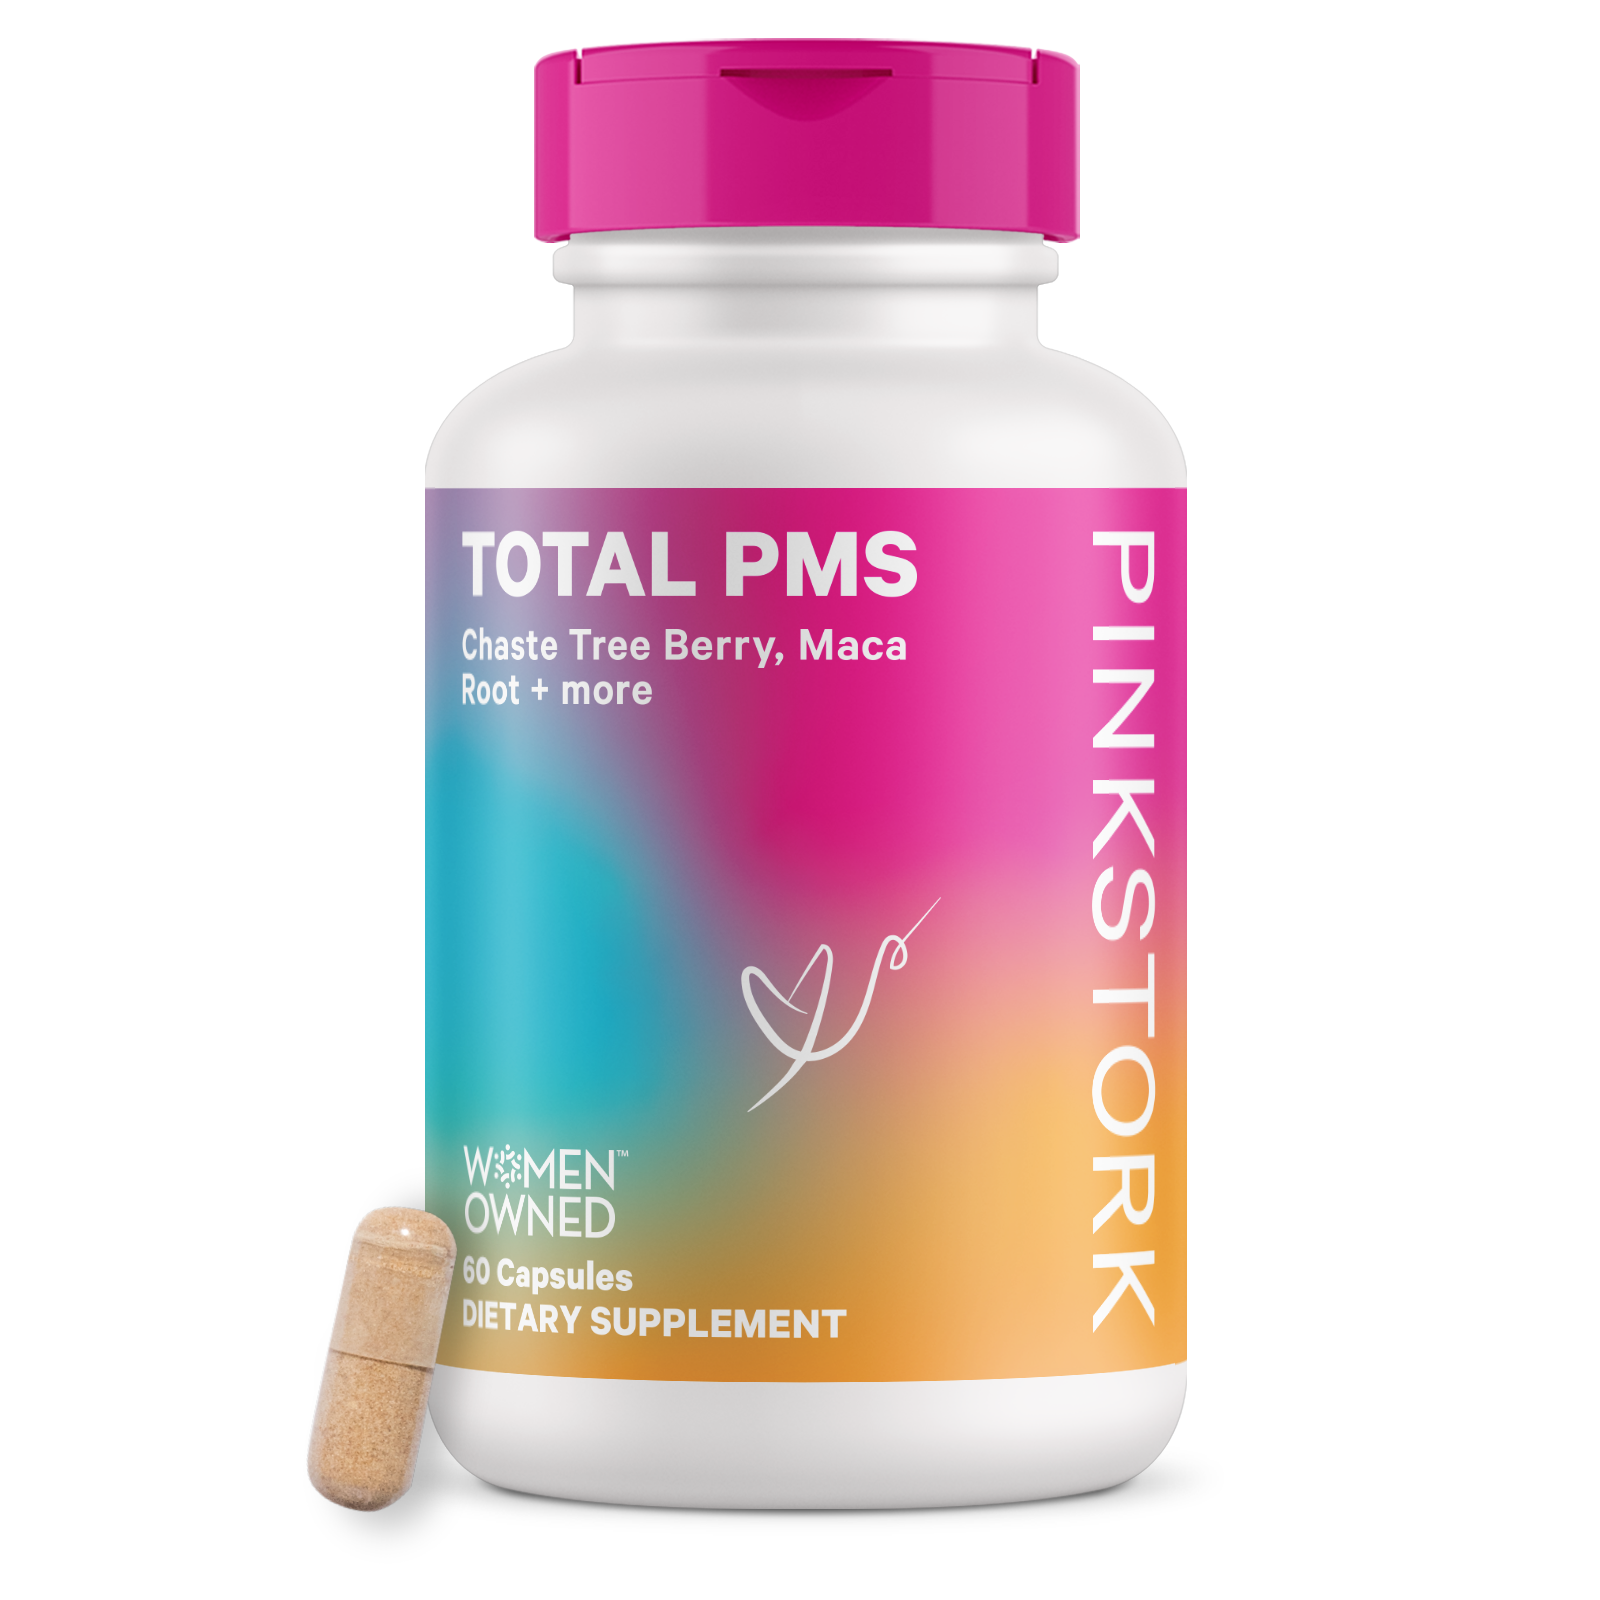 Total PMS